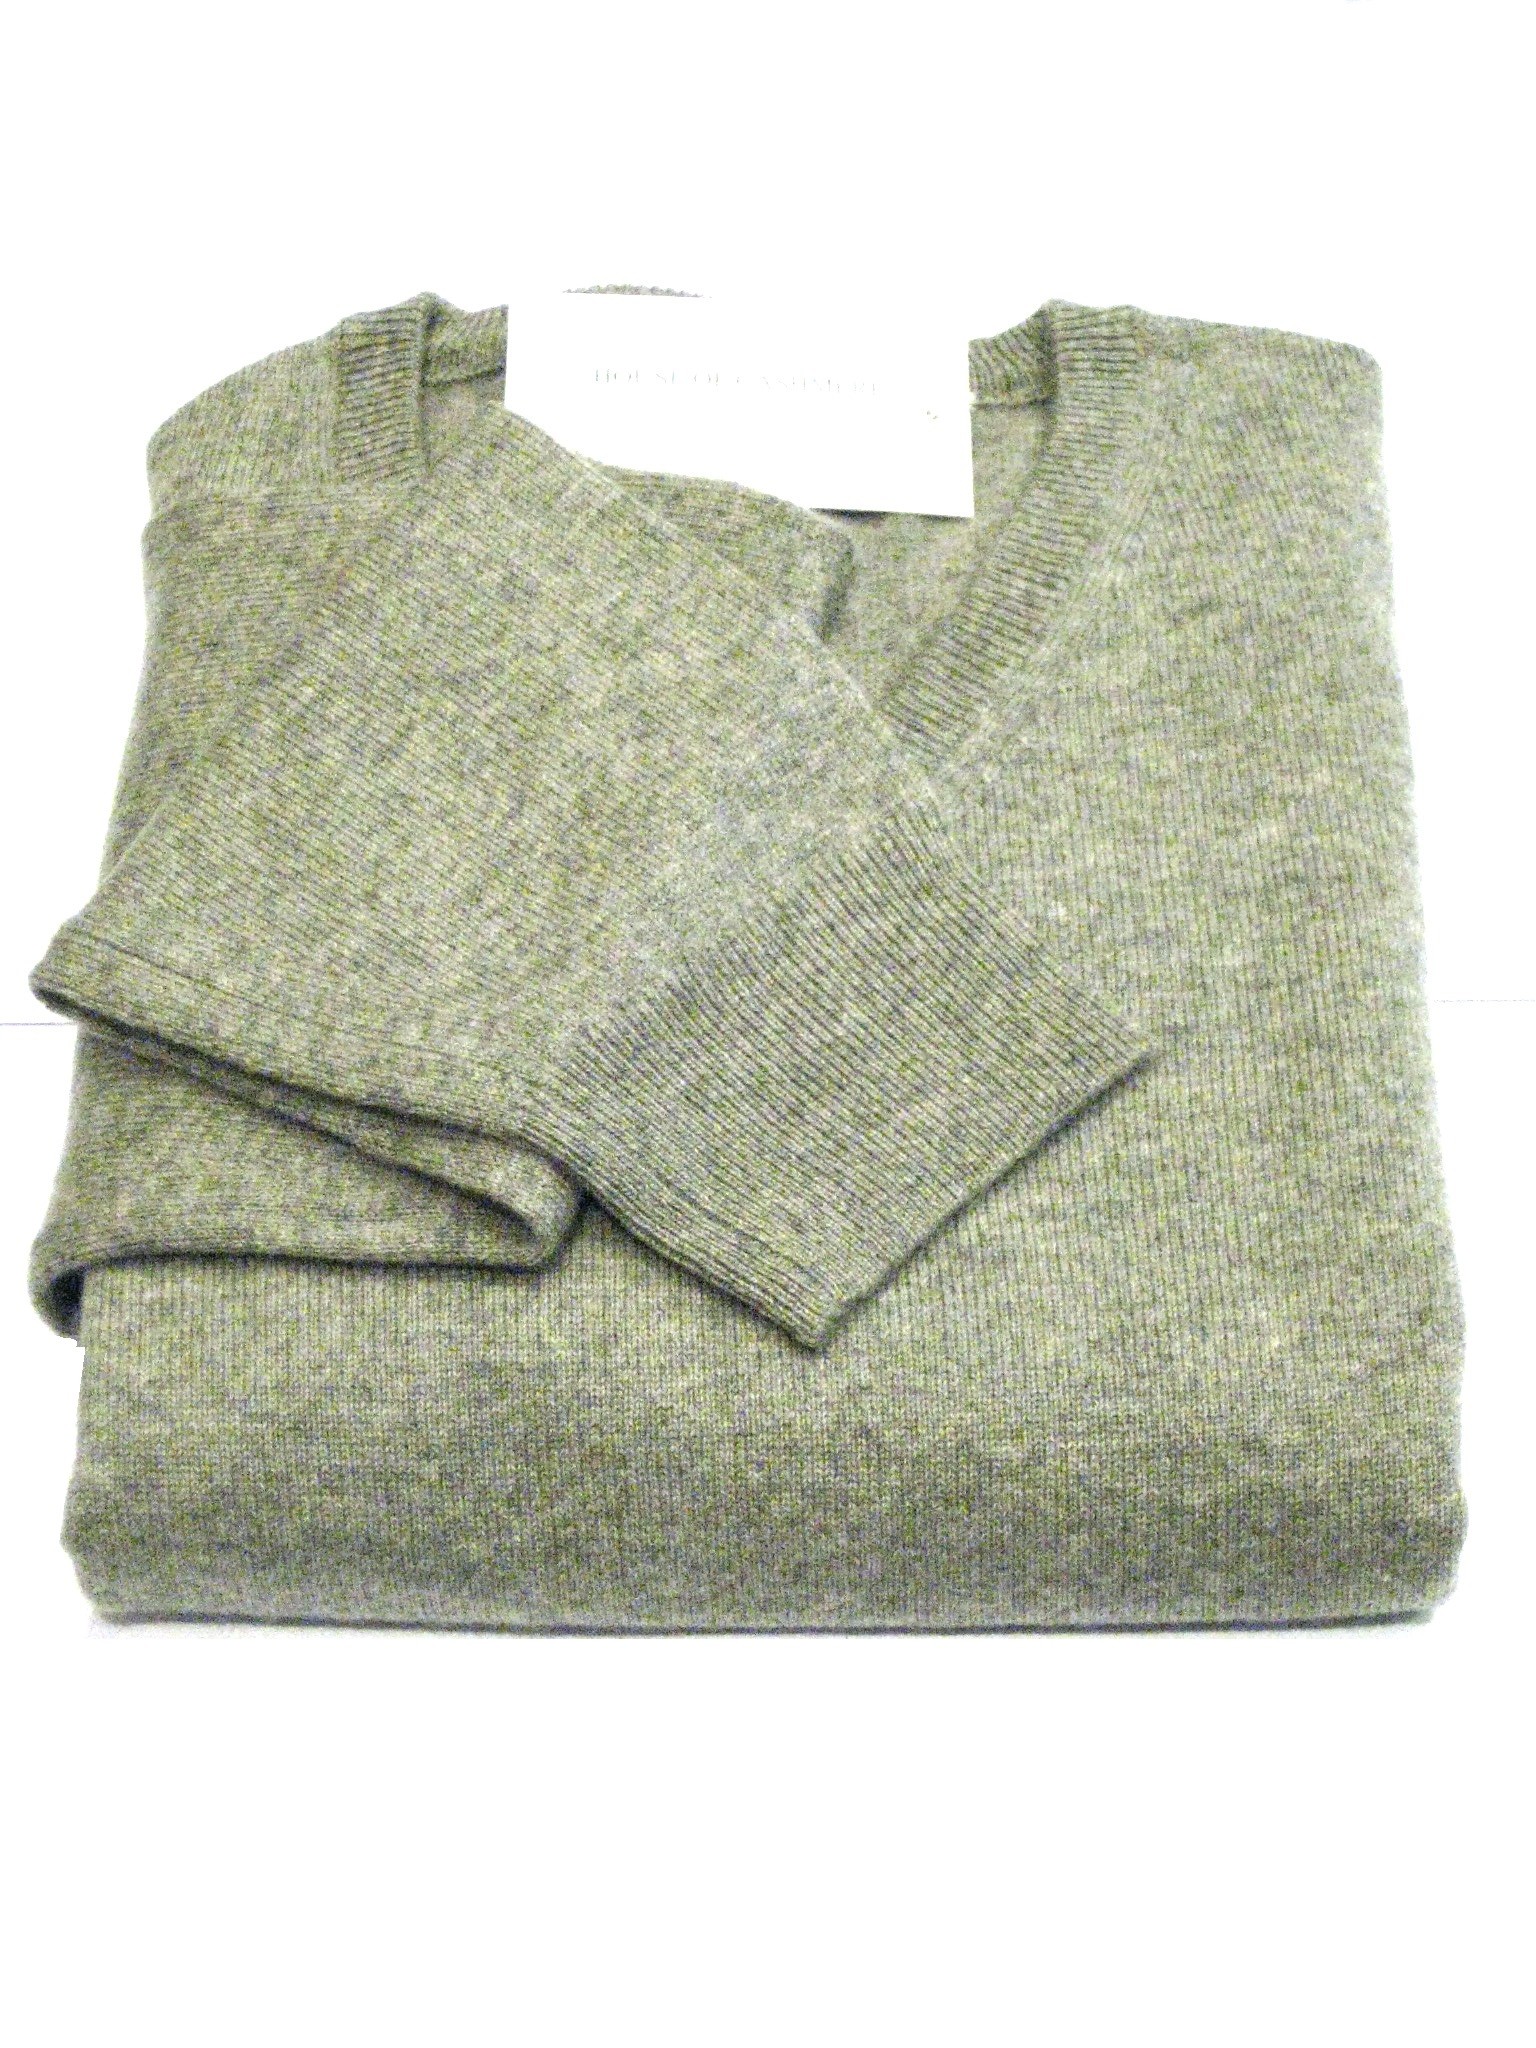 Mens Light Grey Crew Neck Sweater - 100% Cashmere Made in Scotland